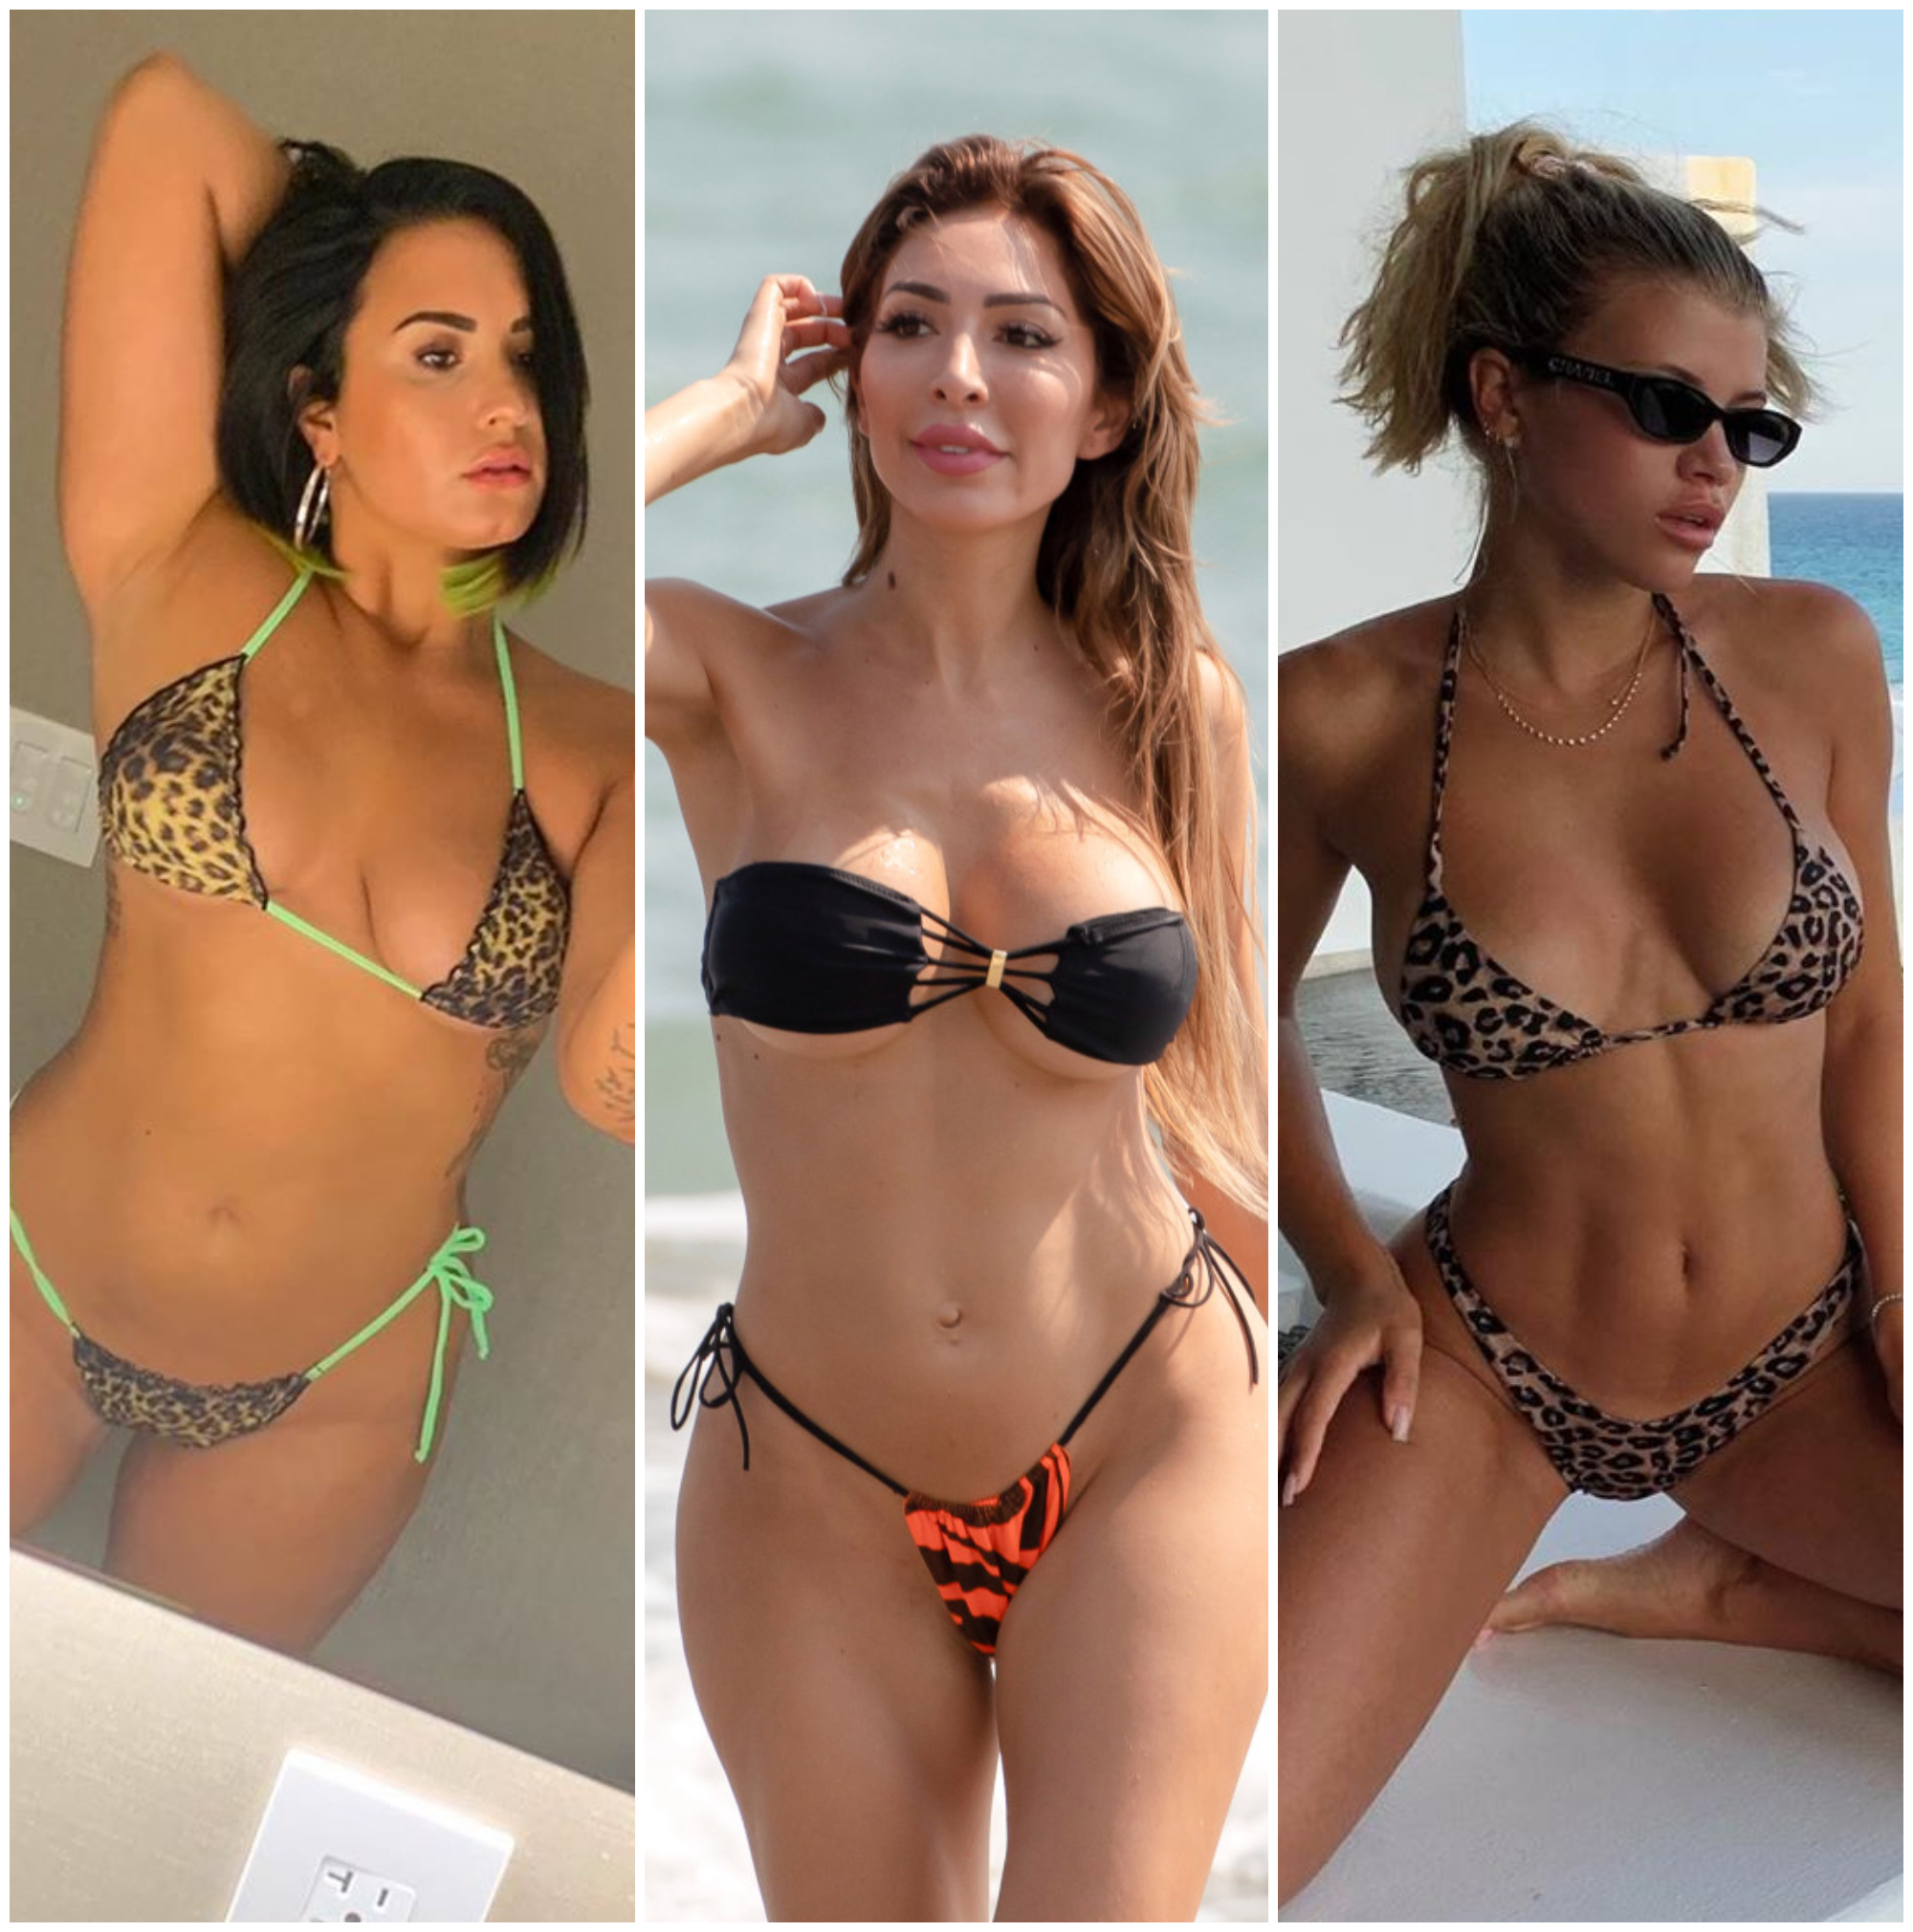 Pelagic scramble Complex Sexy Bikini Photos of Celebrities From Summer: Demi Lovato and More